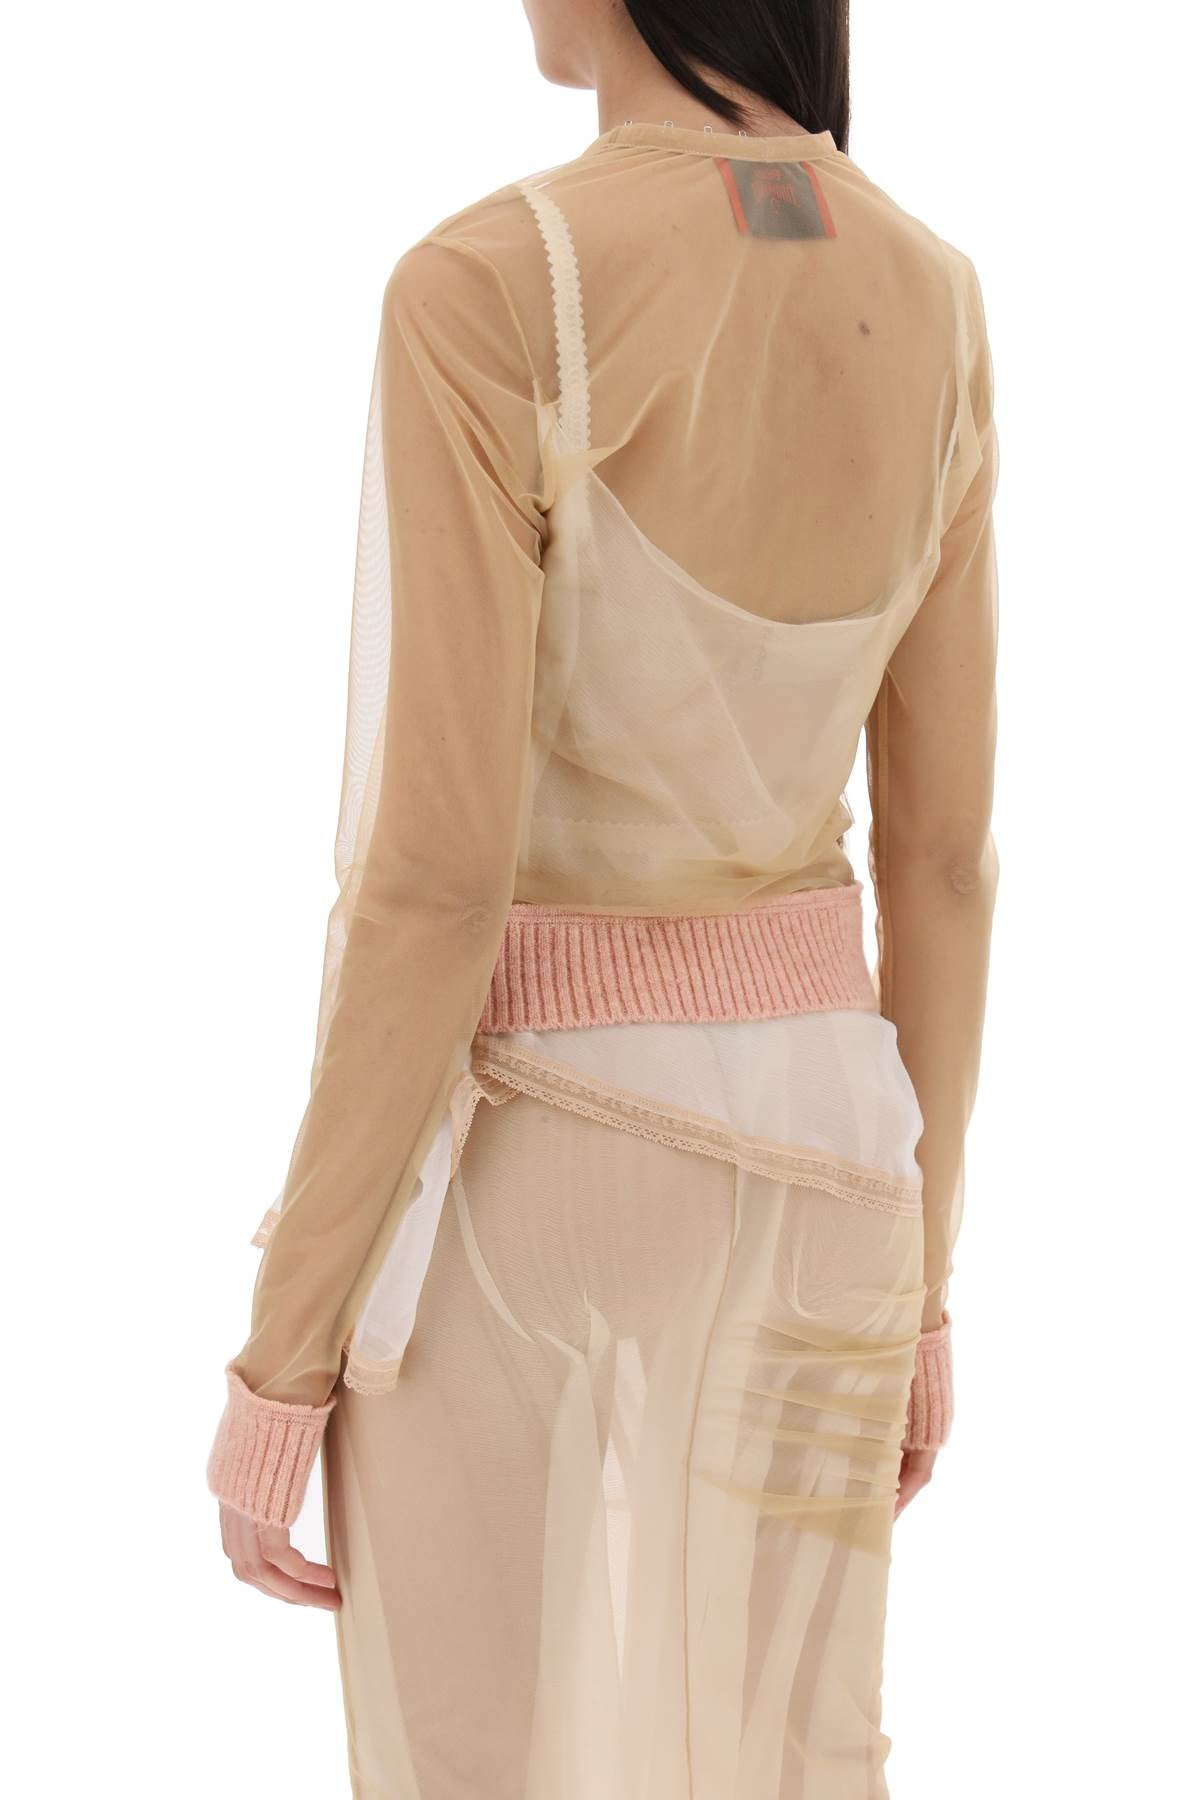 Dilara findikoglu transparent long-sleeved top for a stylish-2